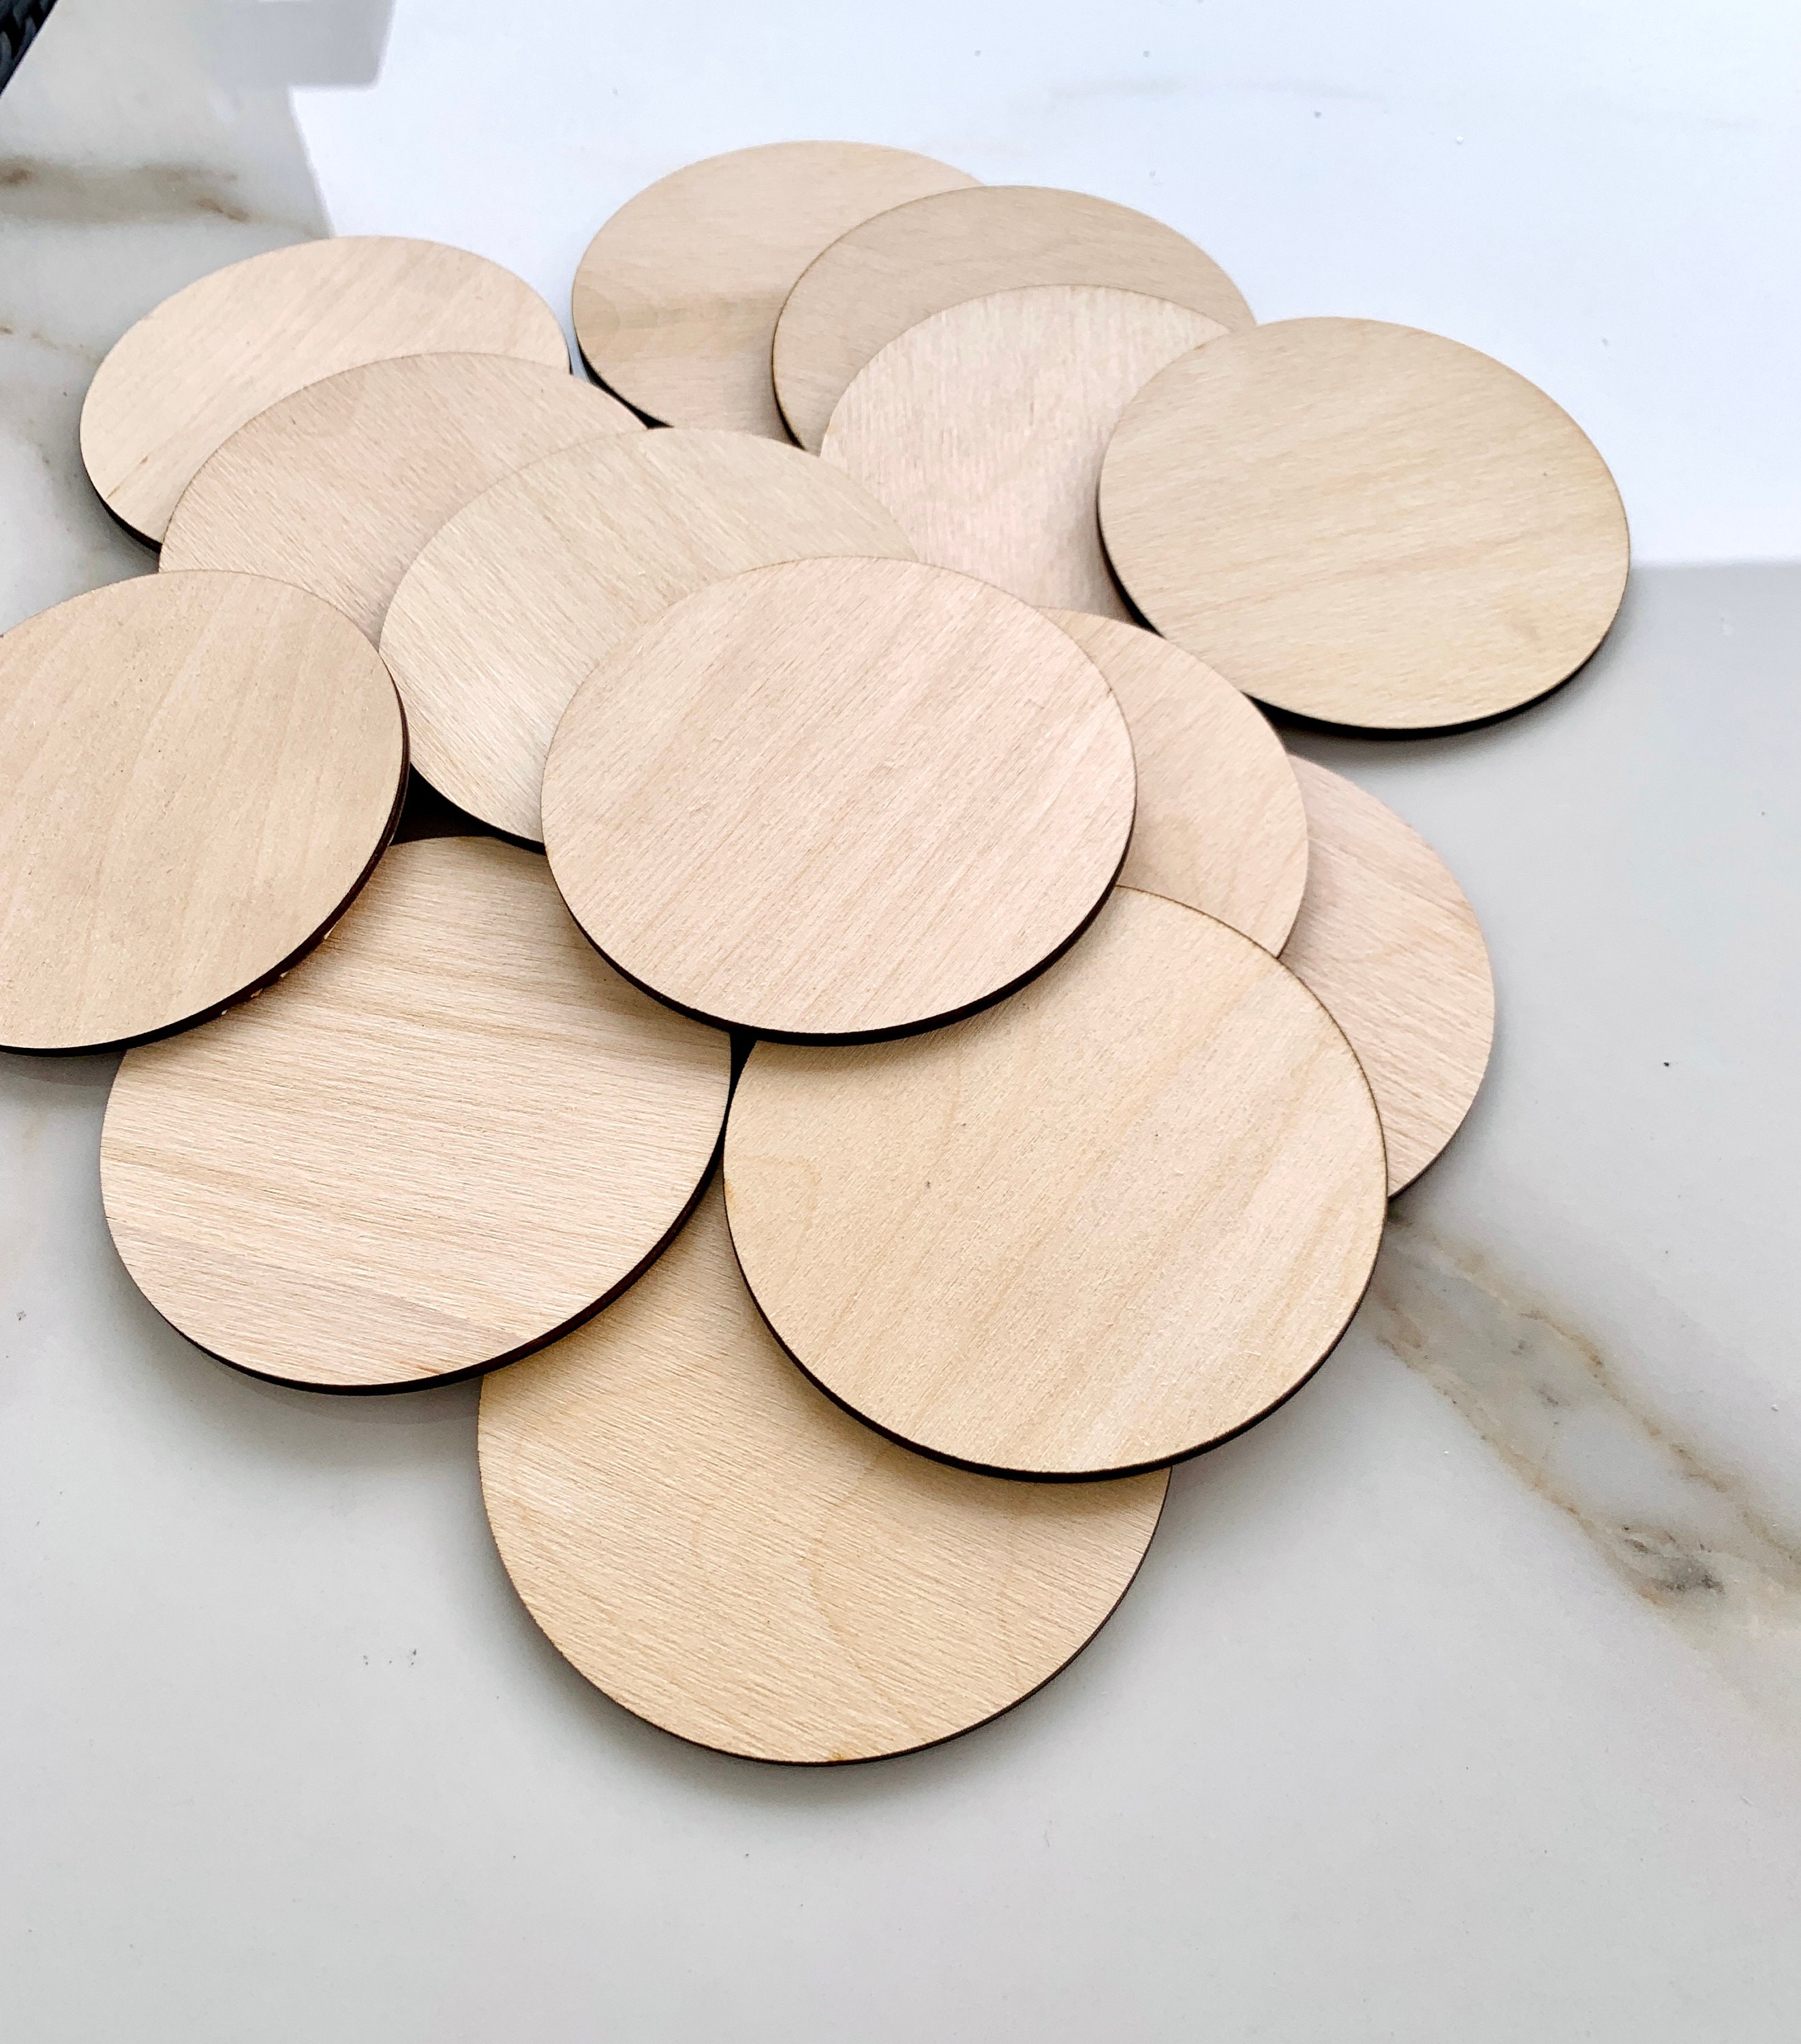 Natural Wood Slices 20 Pcs 3.5-4 Inch Wooden Circles Crafts Wood